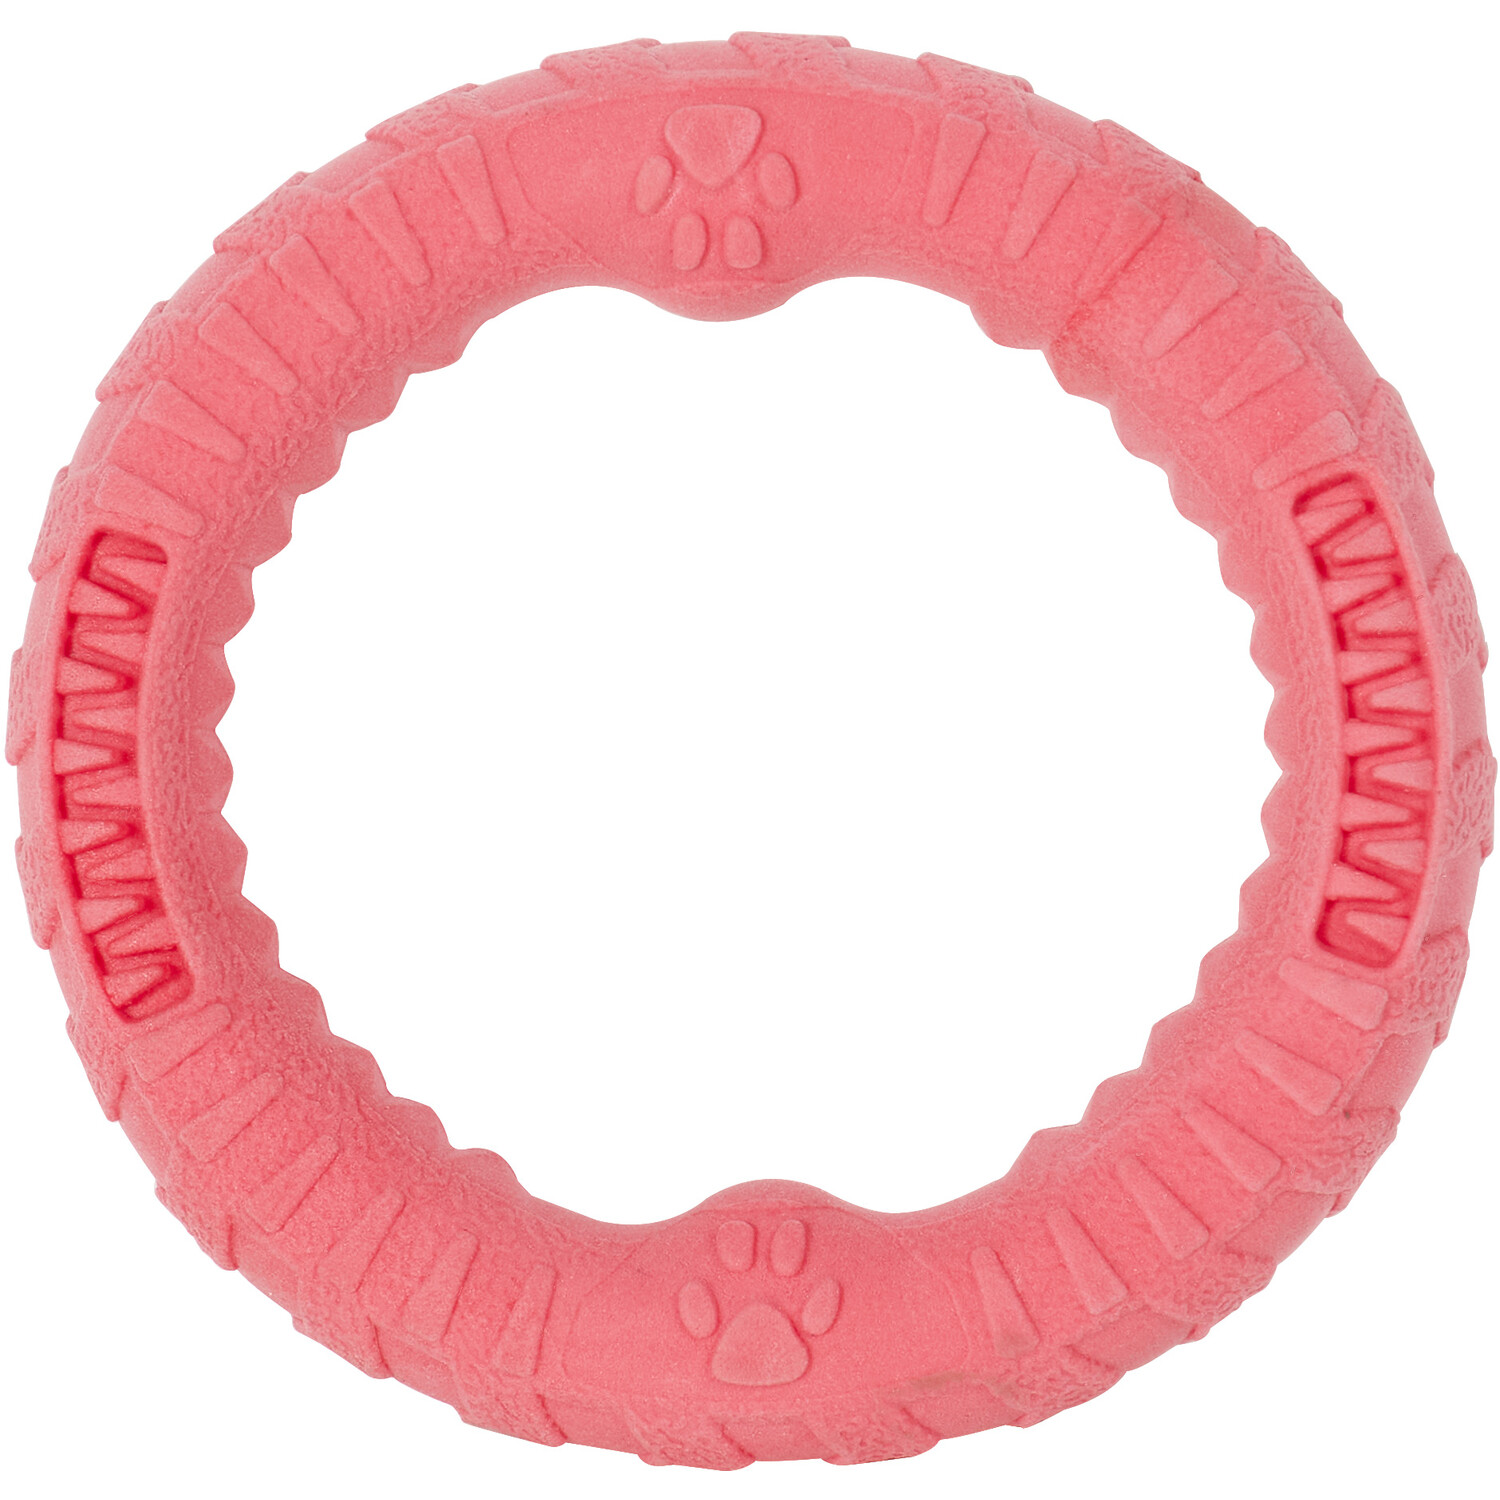 Floating Dental Ring Dog Toy Image 1